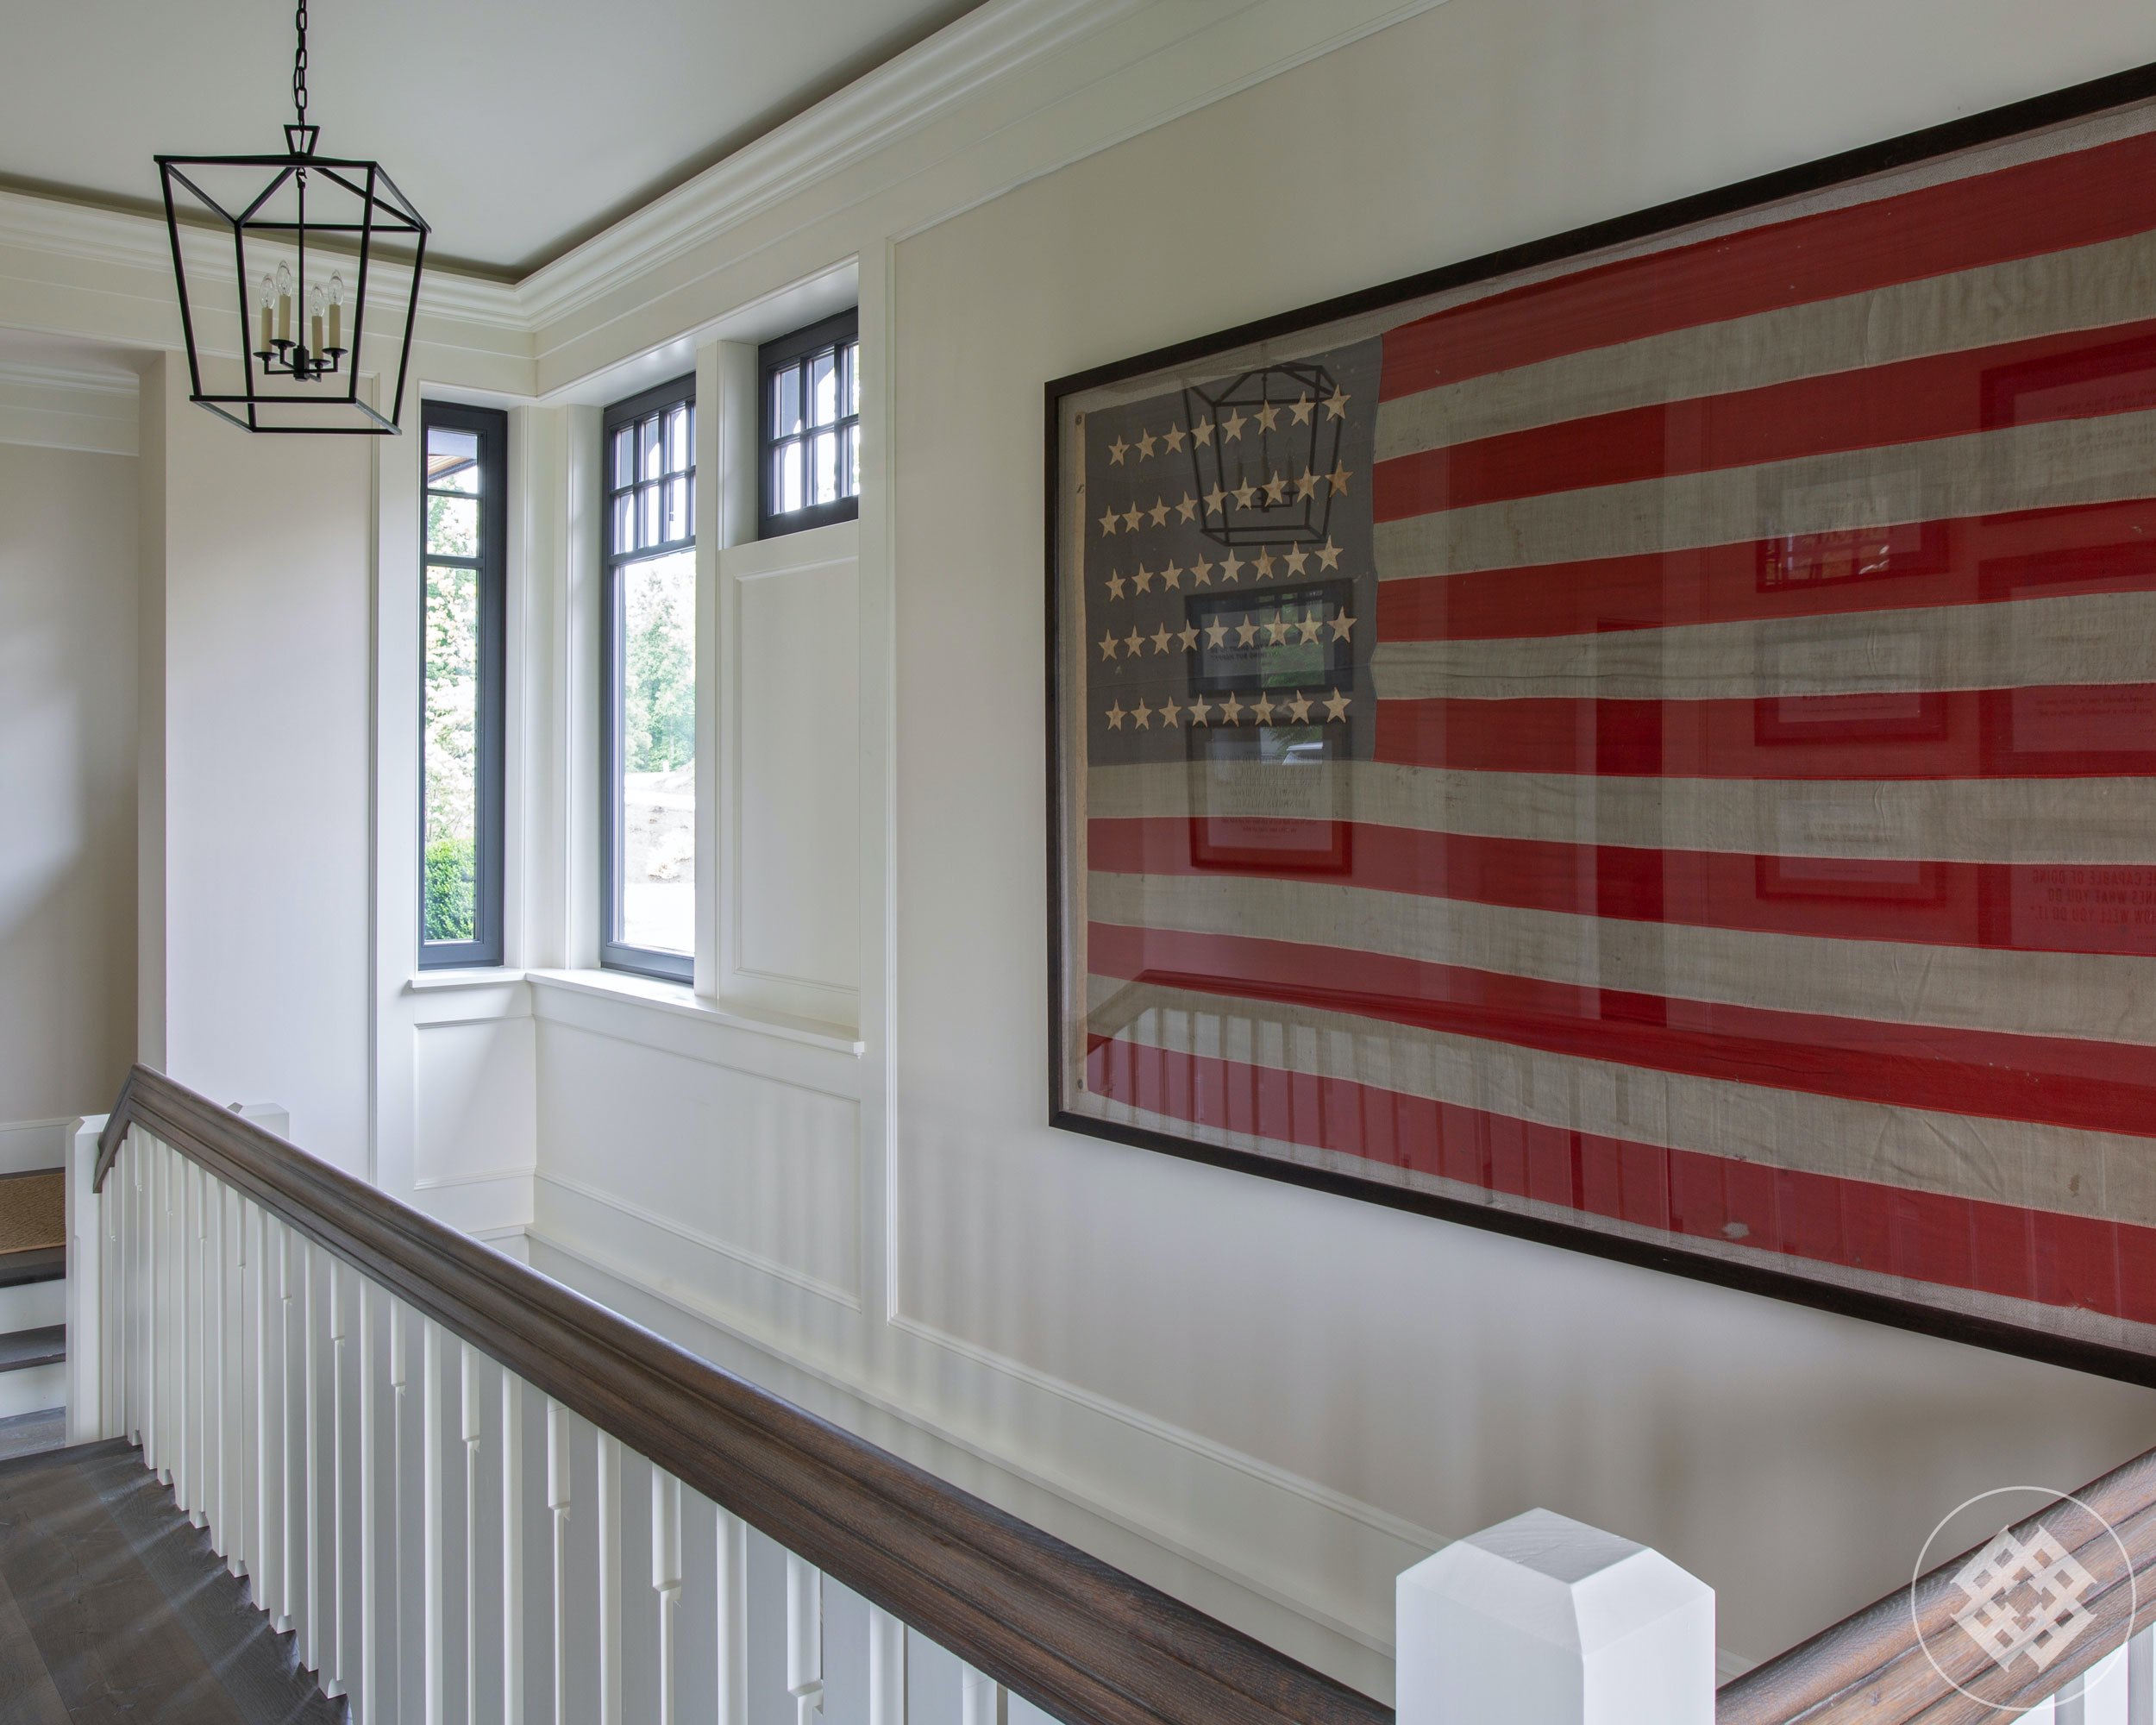 kkl-vintage-42-star-american-flag-graces-top-of-lake-house-stairs.jpg